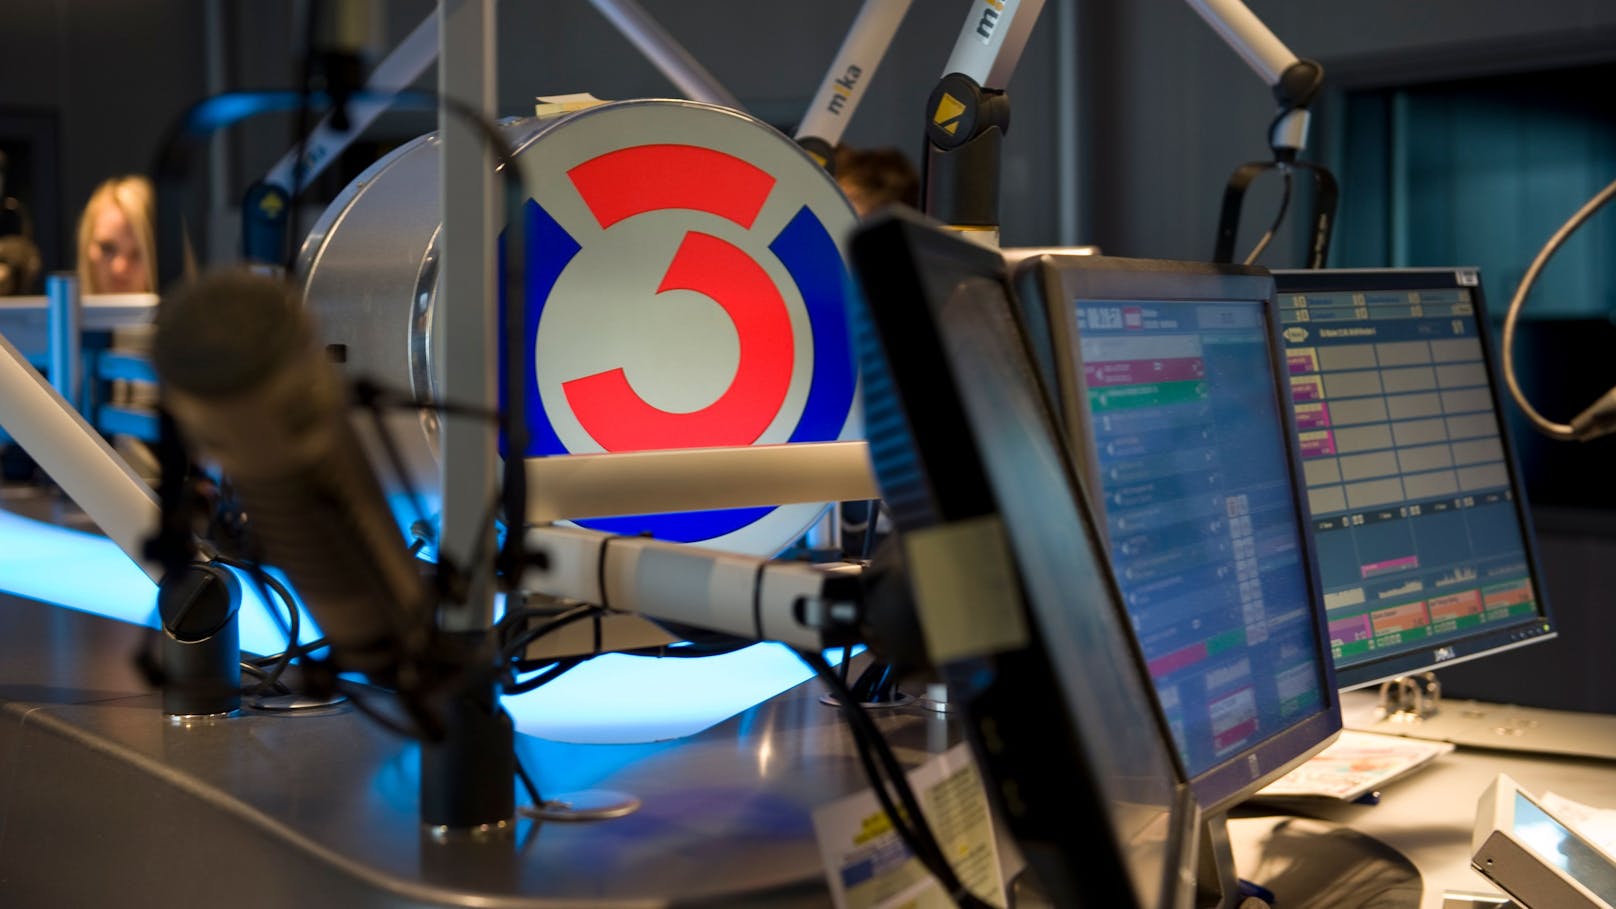 Europäische Radiosender spielen "Give Peace a Chance" – darunter auch Ö3.